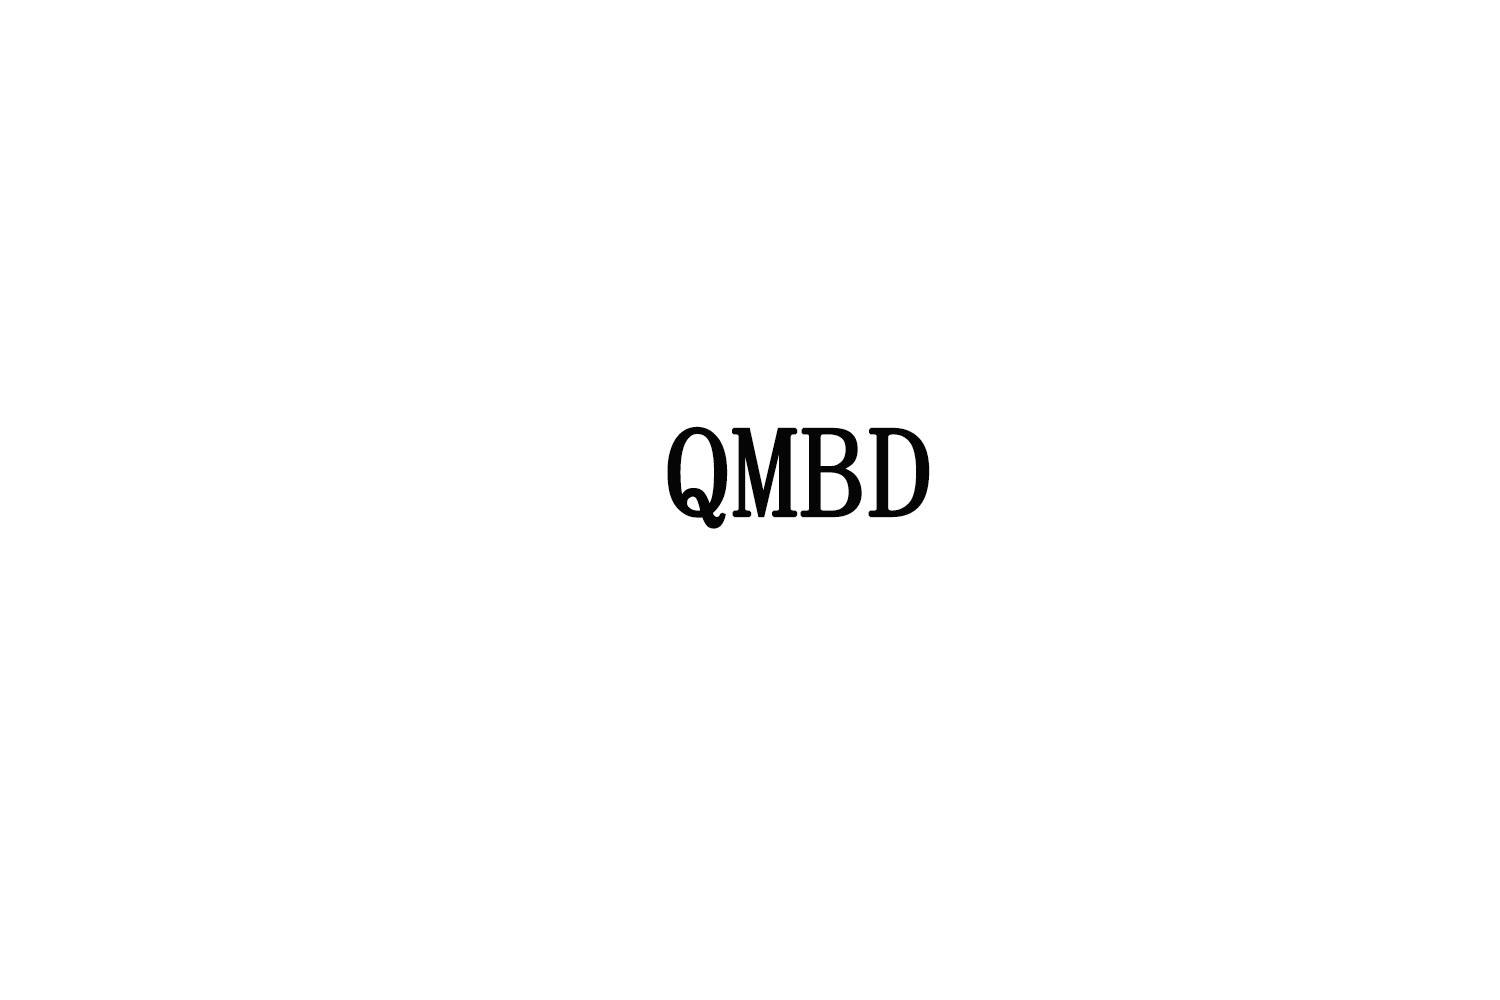 QMBD